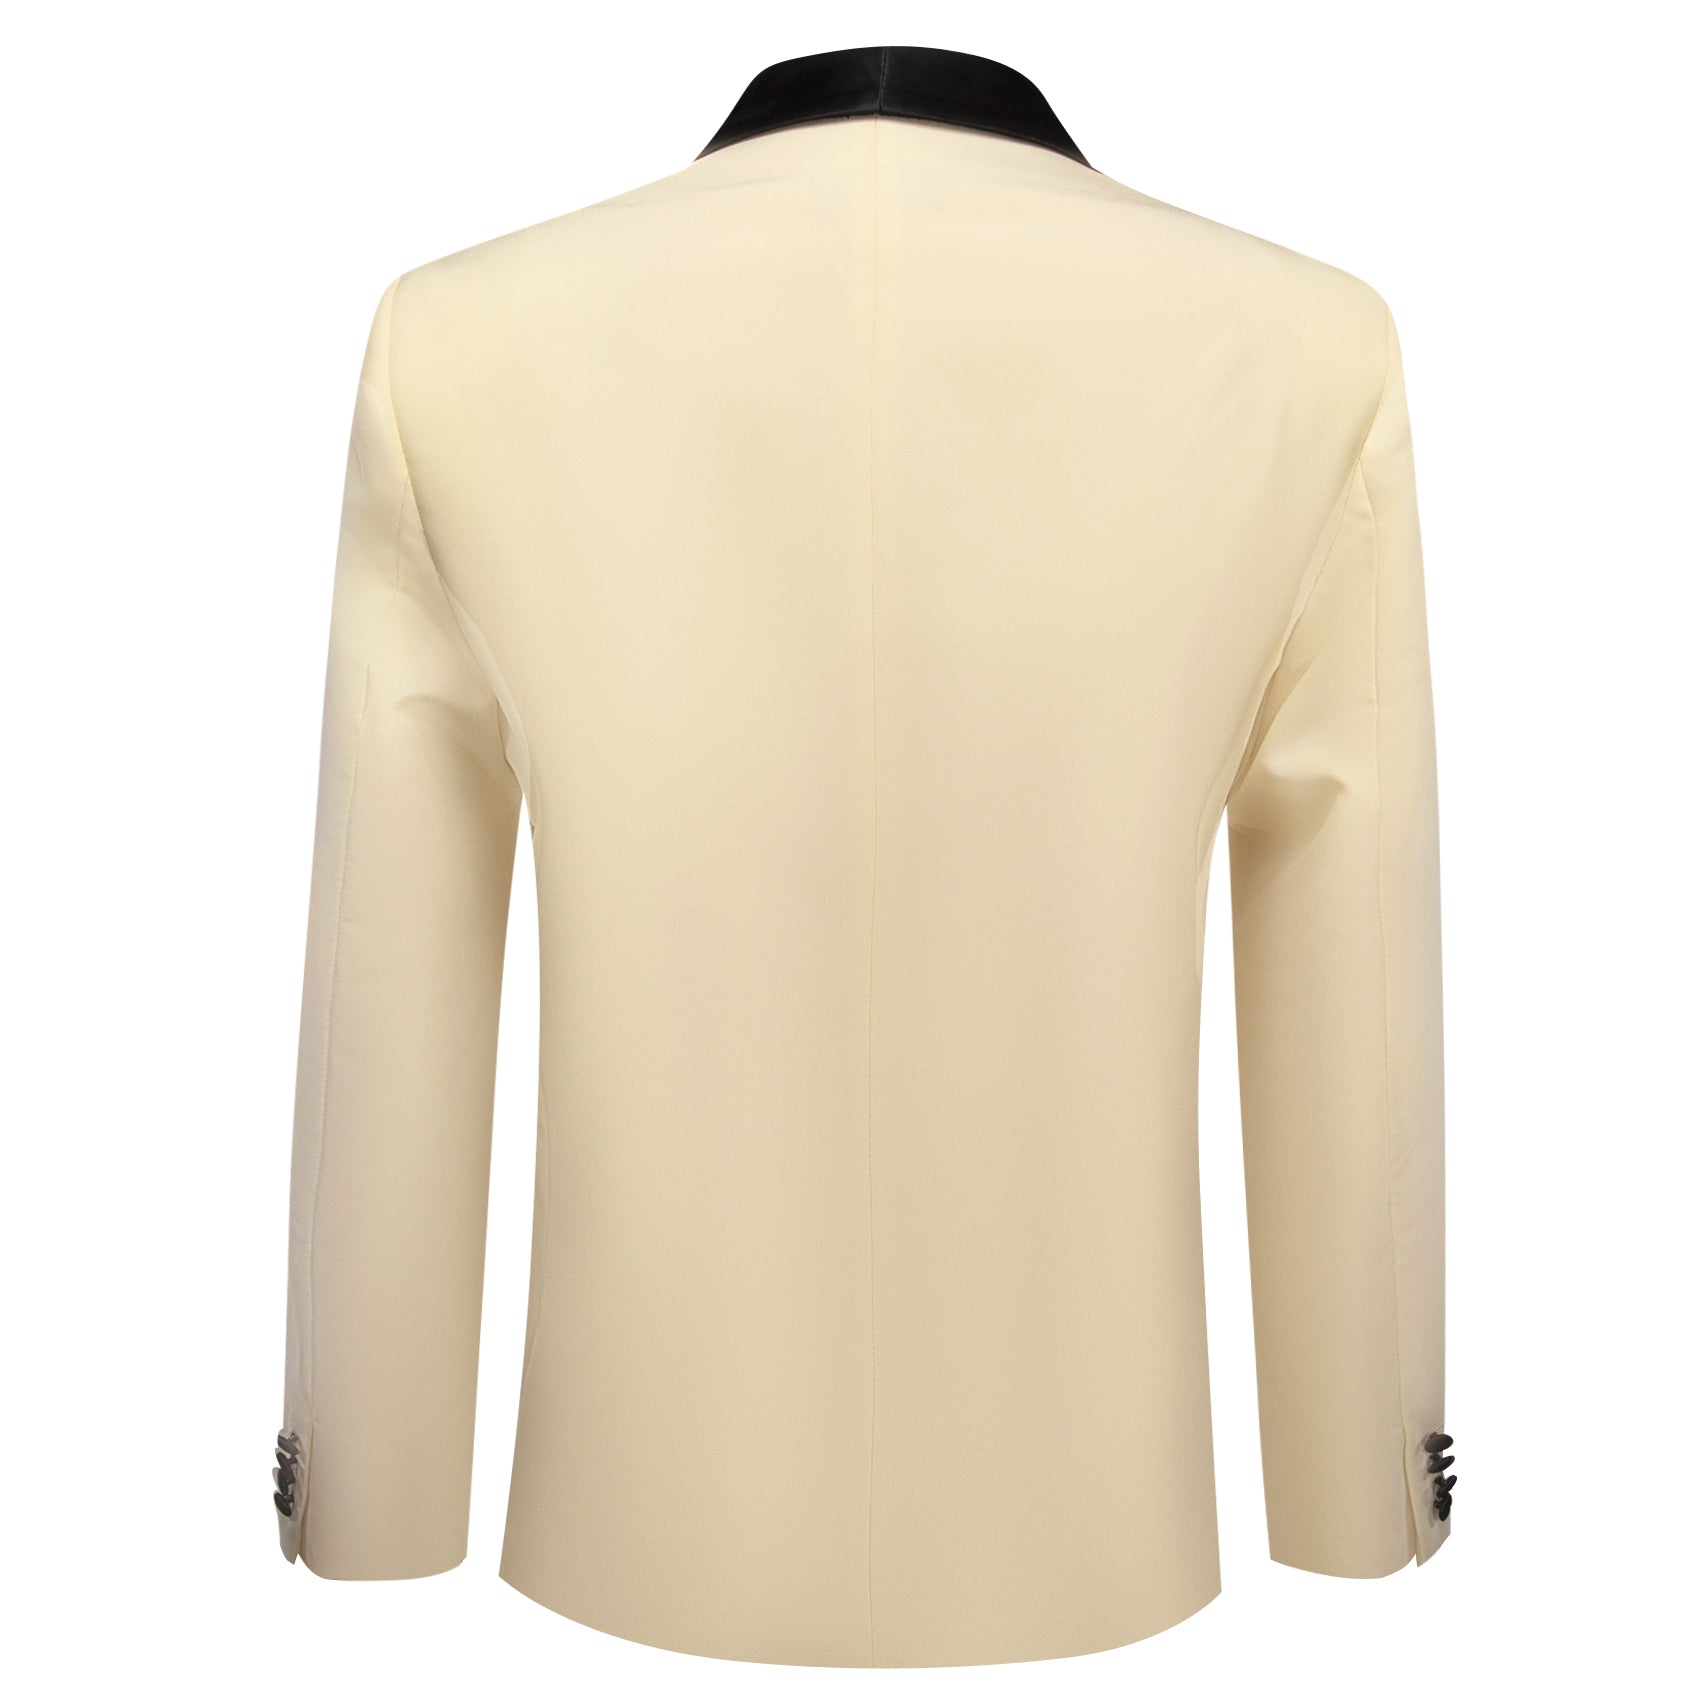 Men's Dress Vanilla Solid Suit Jacket Slim One Button Stylish Blazer